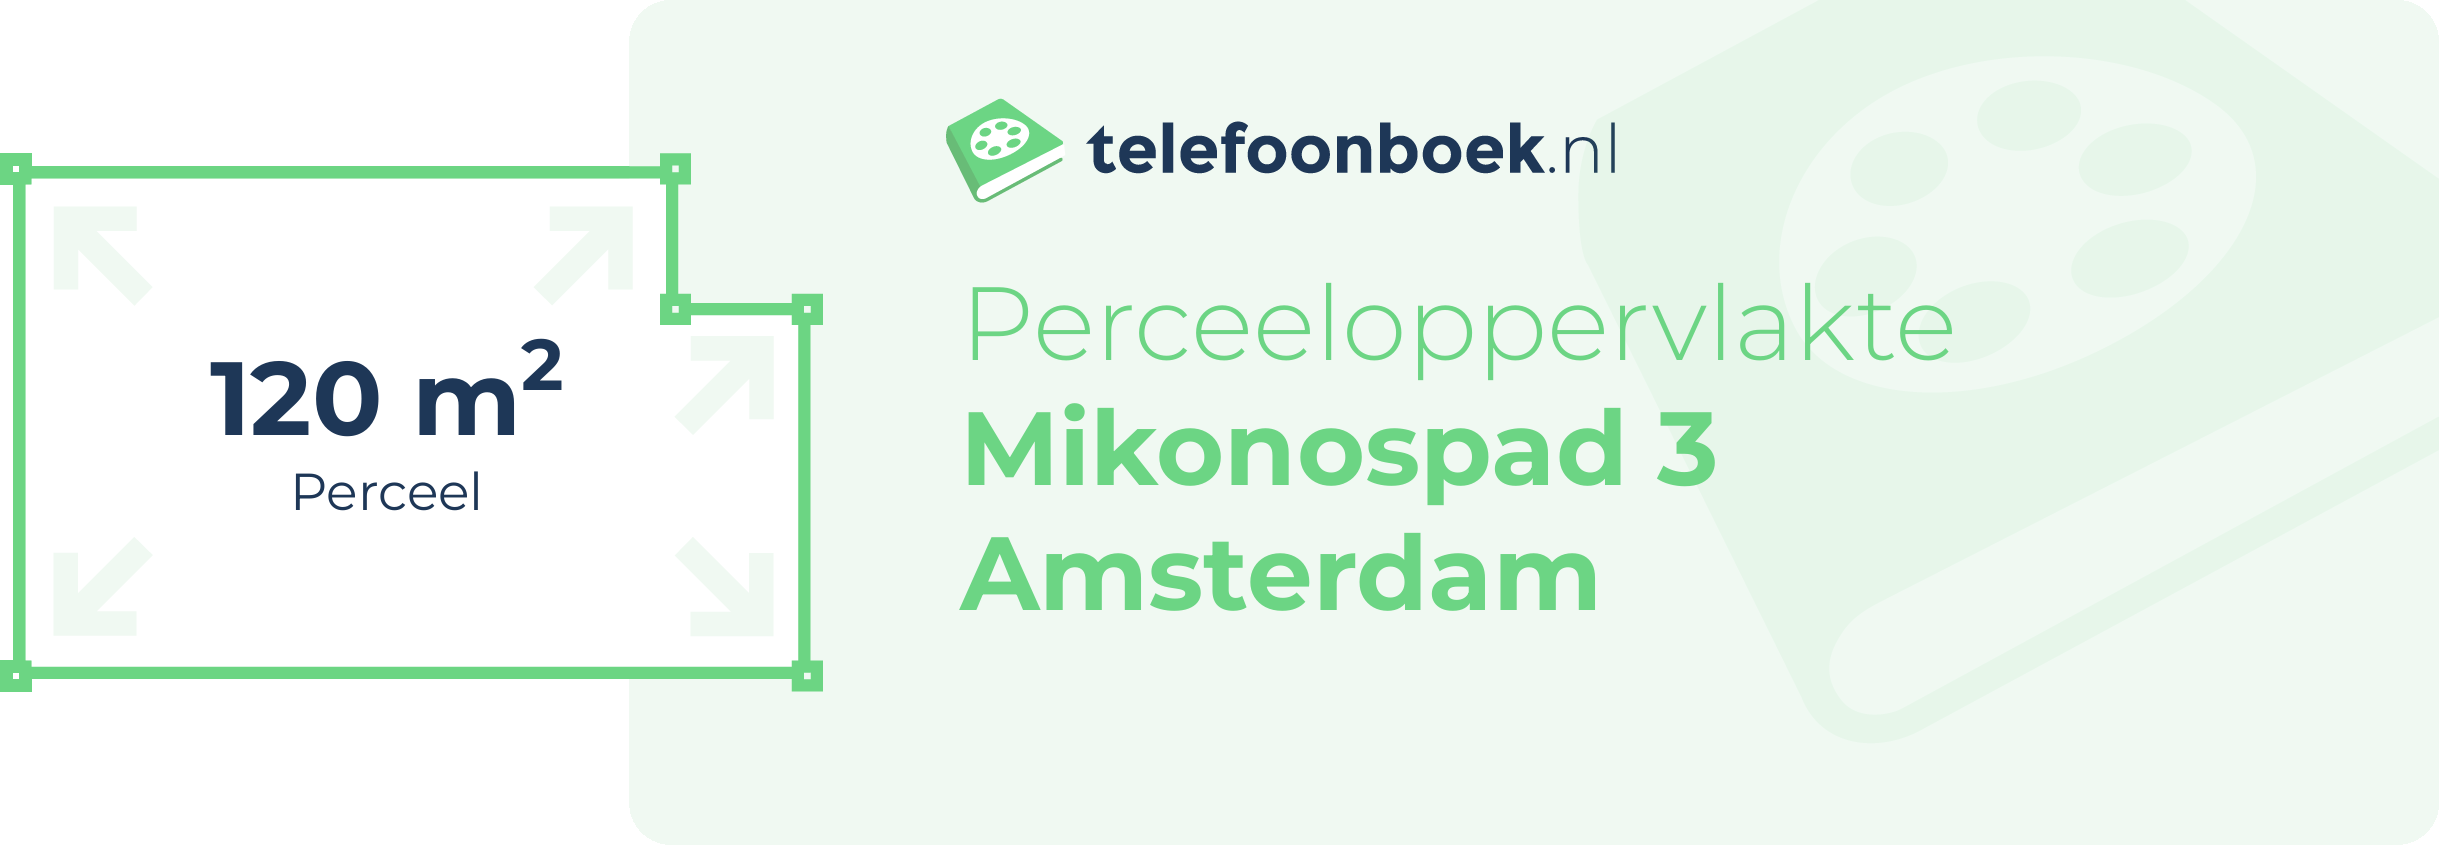 Perceeloppervlakte Mikonospad 3 Amsterdam